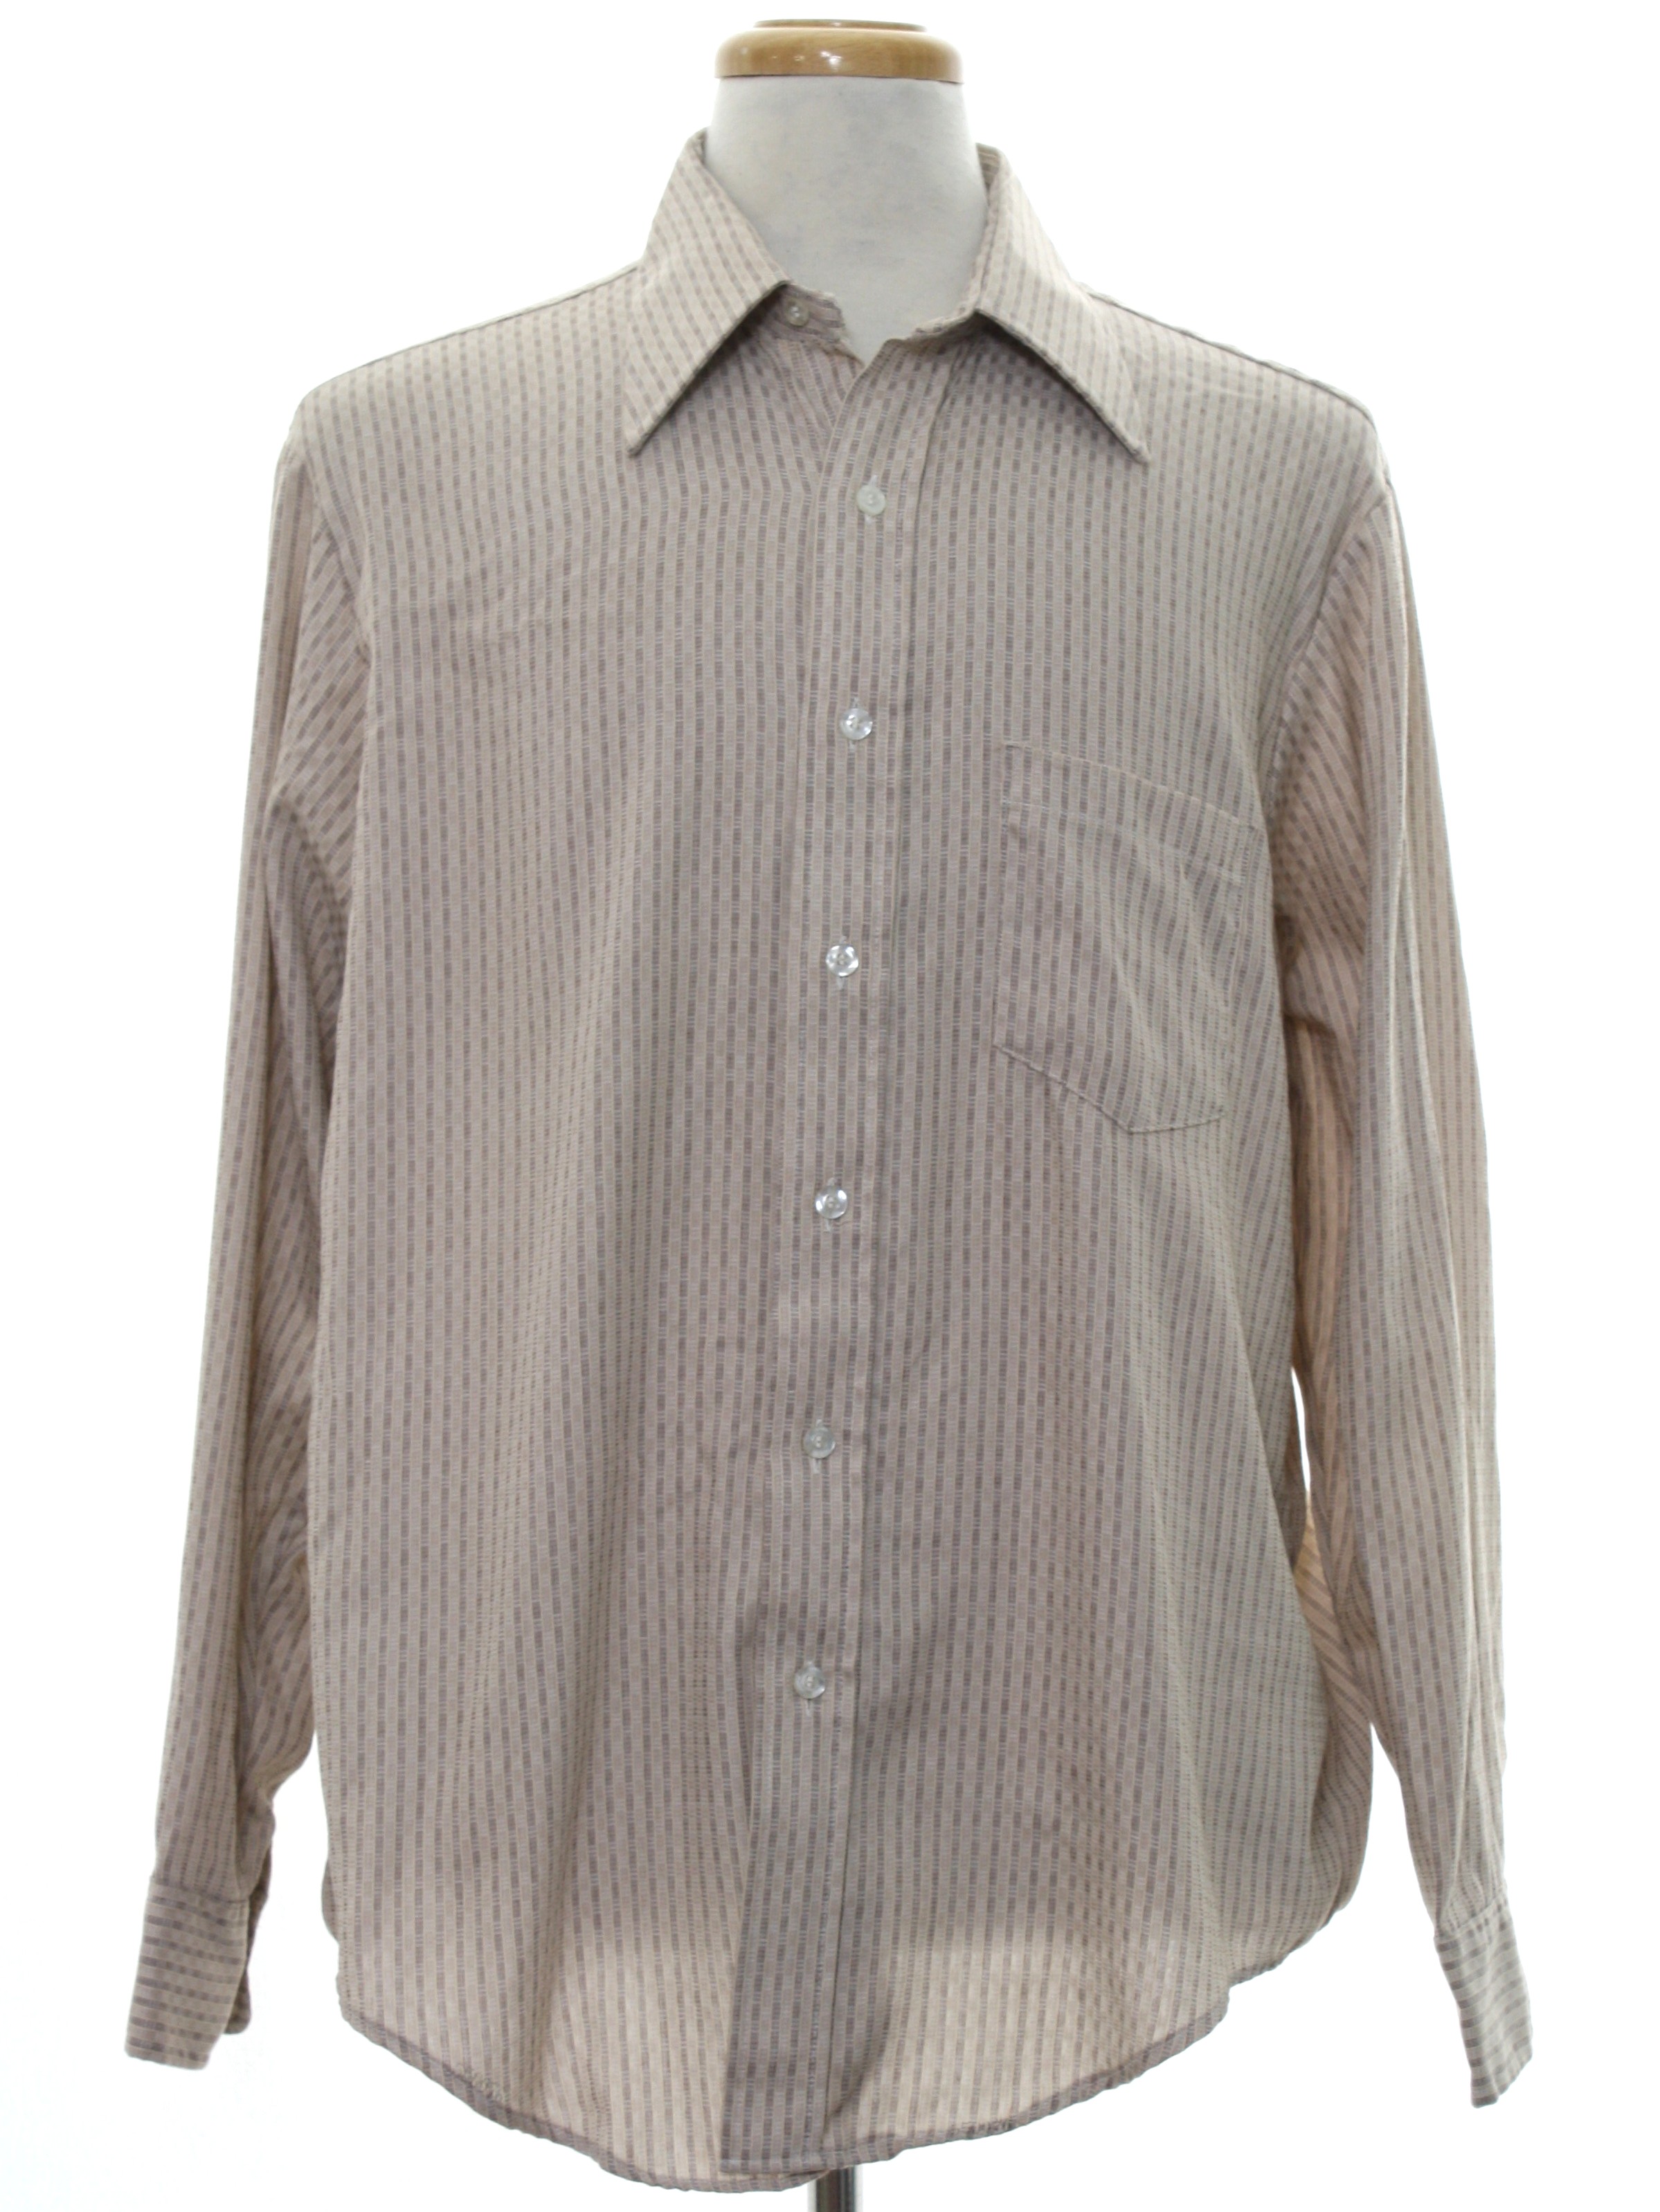 JC Penney 1970s Vintage Shirt: 70s -JC Penney- Mens off white ...